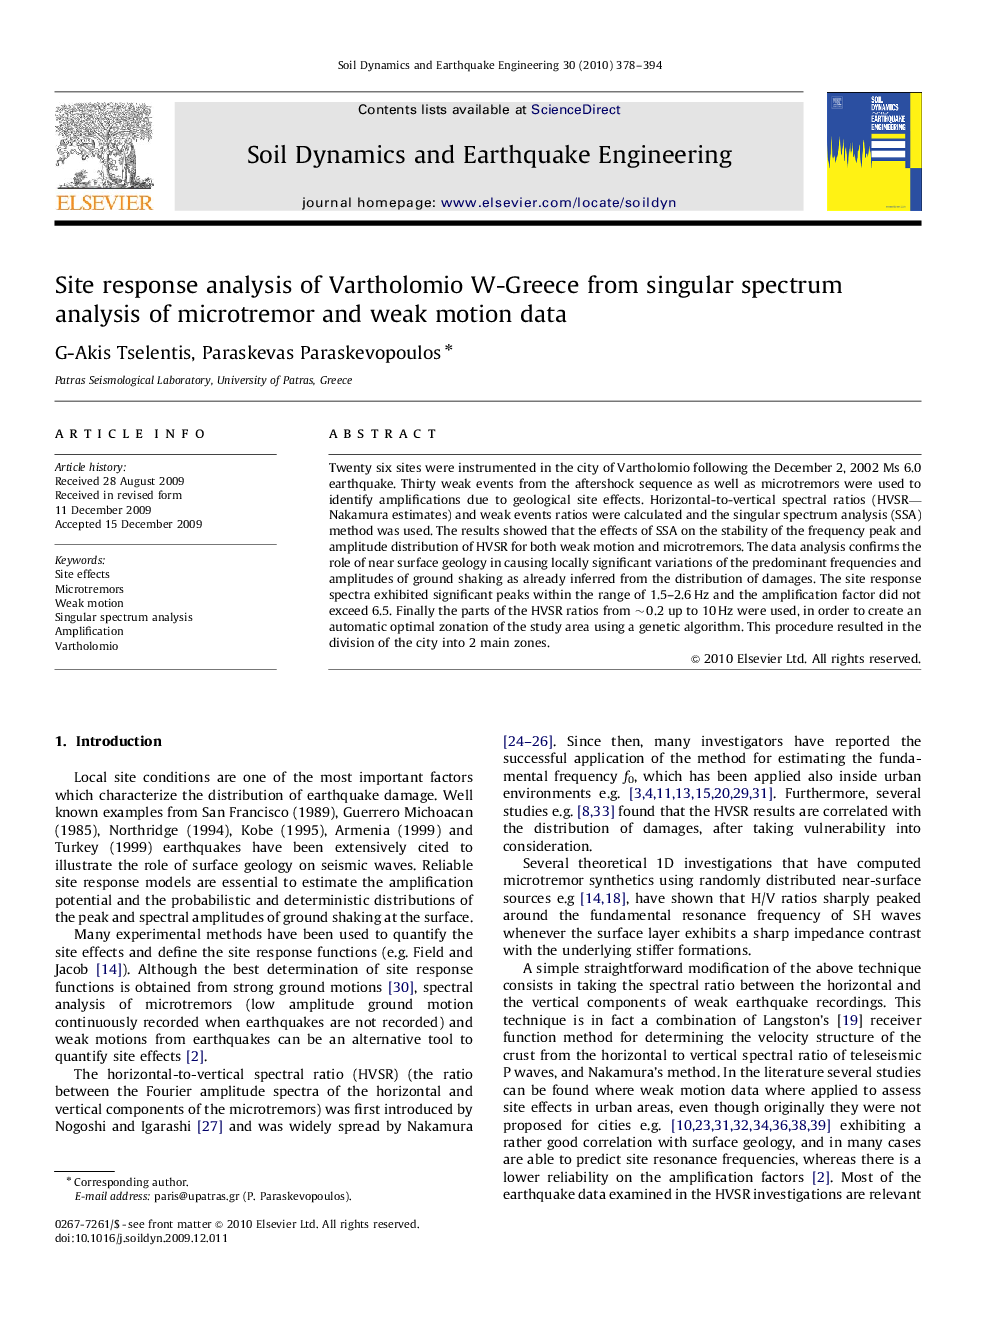 Site response analysis of Vartholomio W-Greece from singular spectrum analysis of microtremor and weak motion data